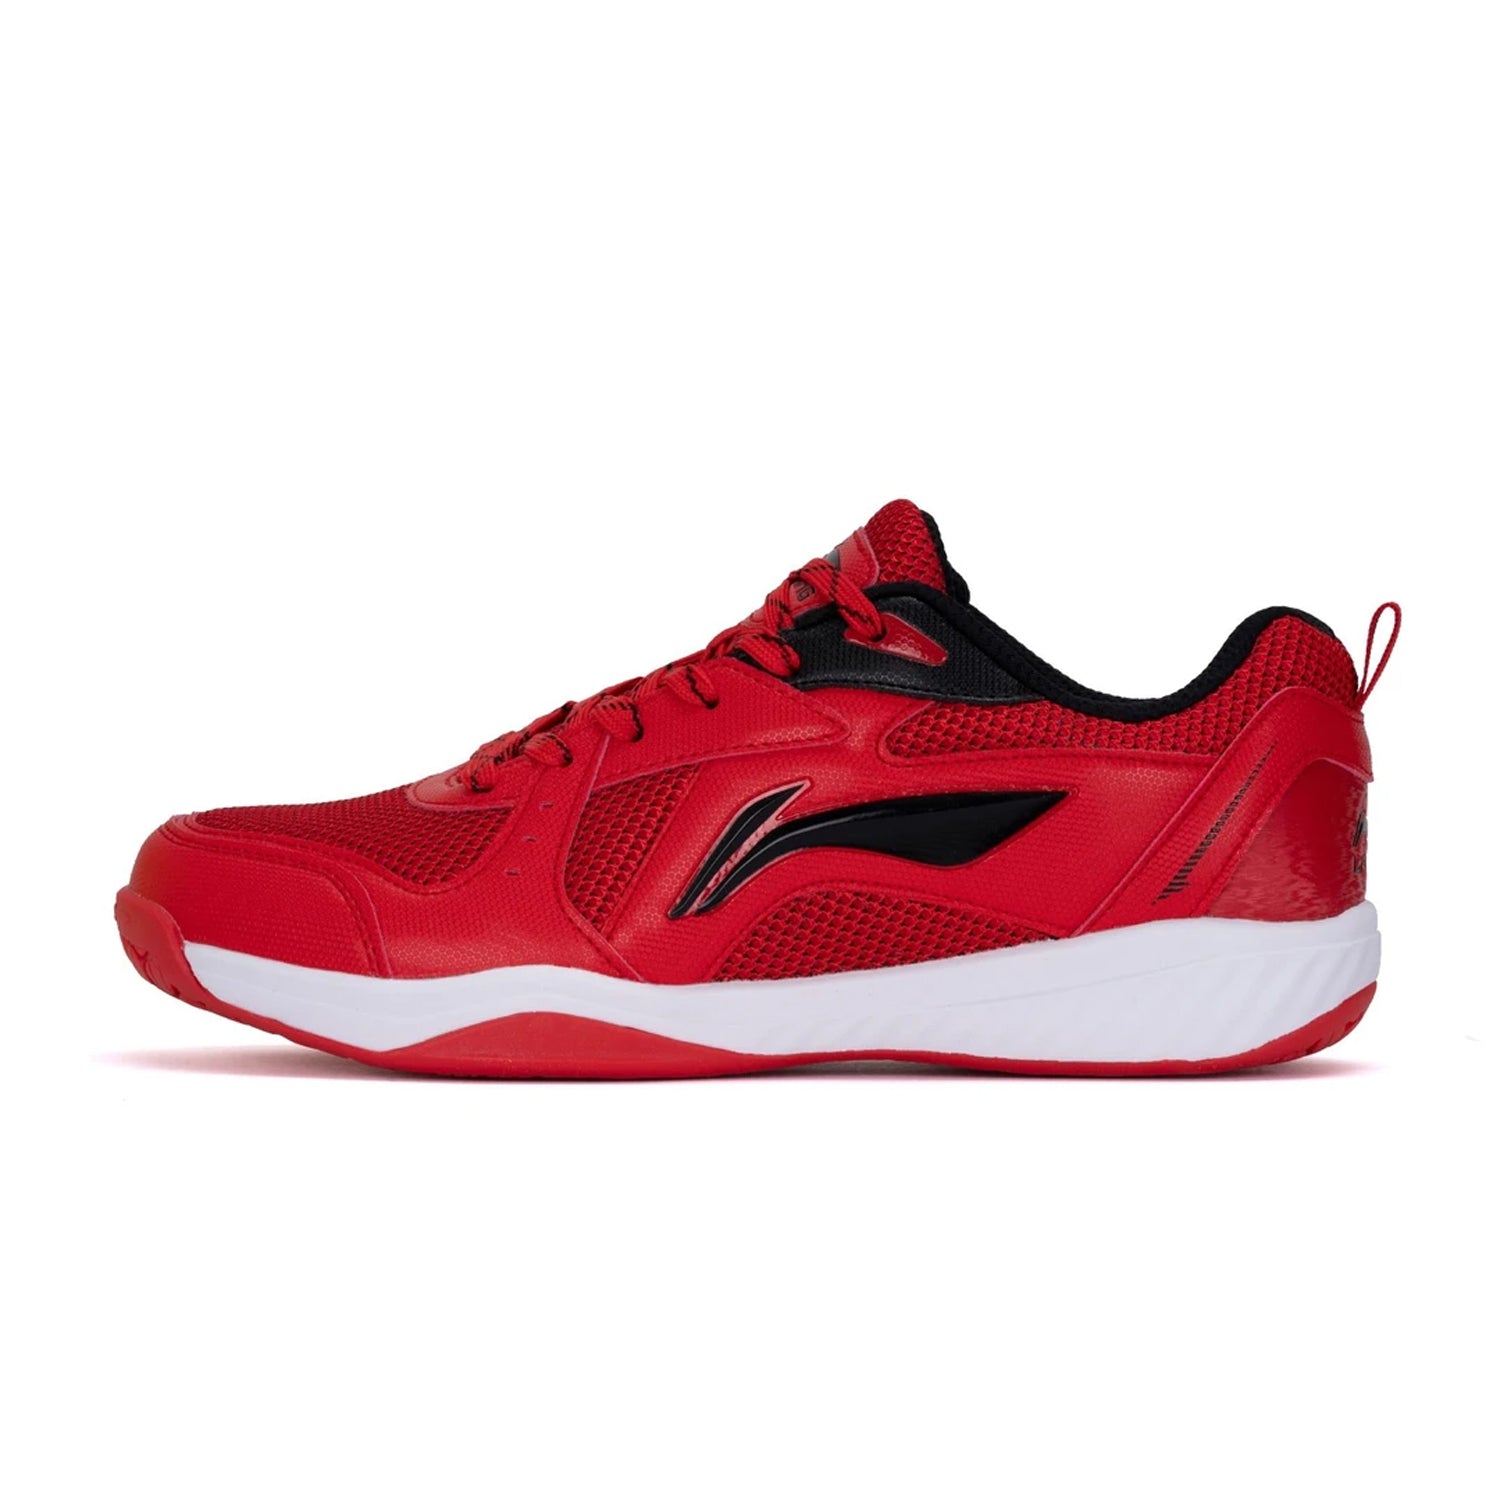 Li-Ning Ultra III Non Marking Badminton Shoe, Red/Black